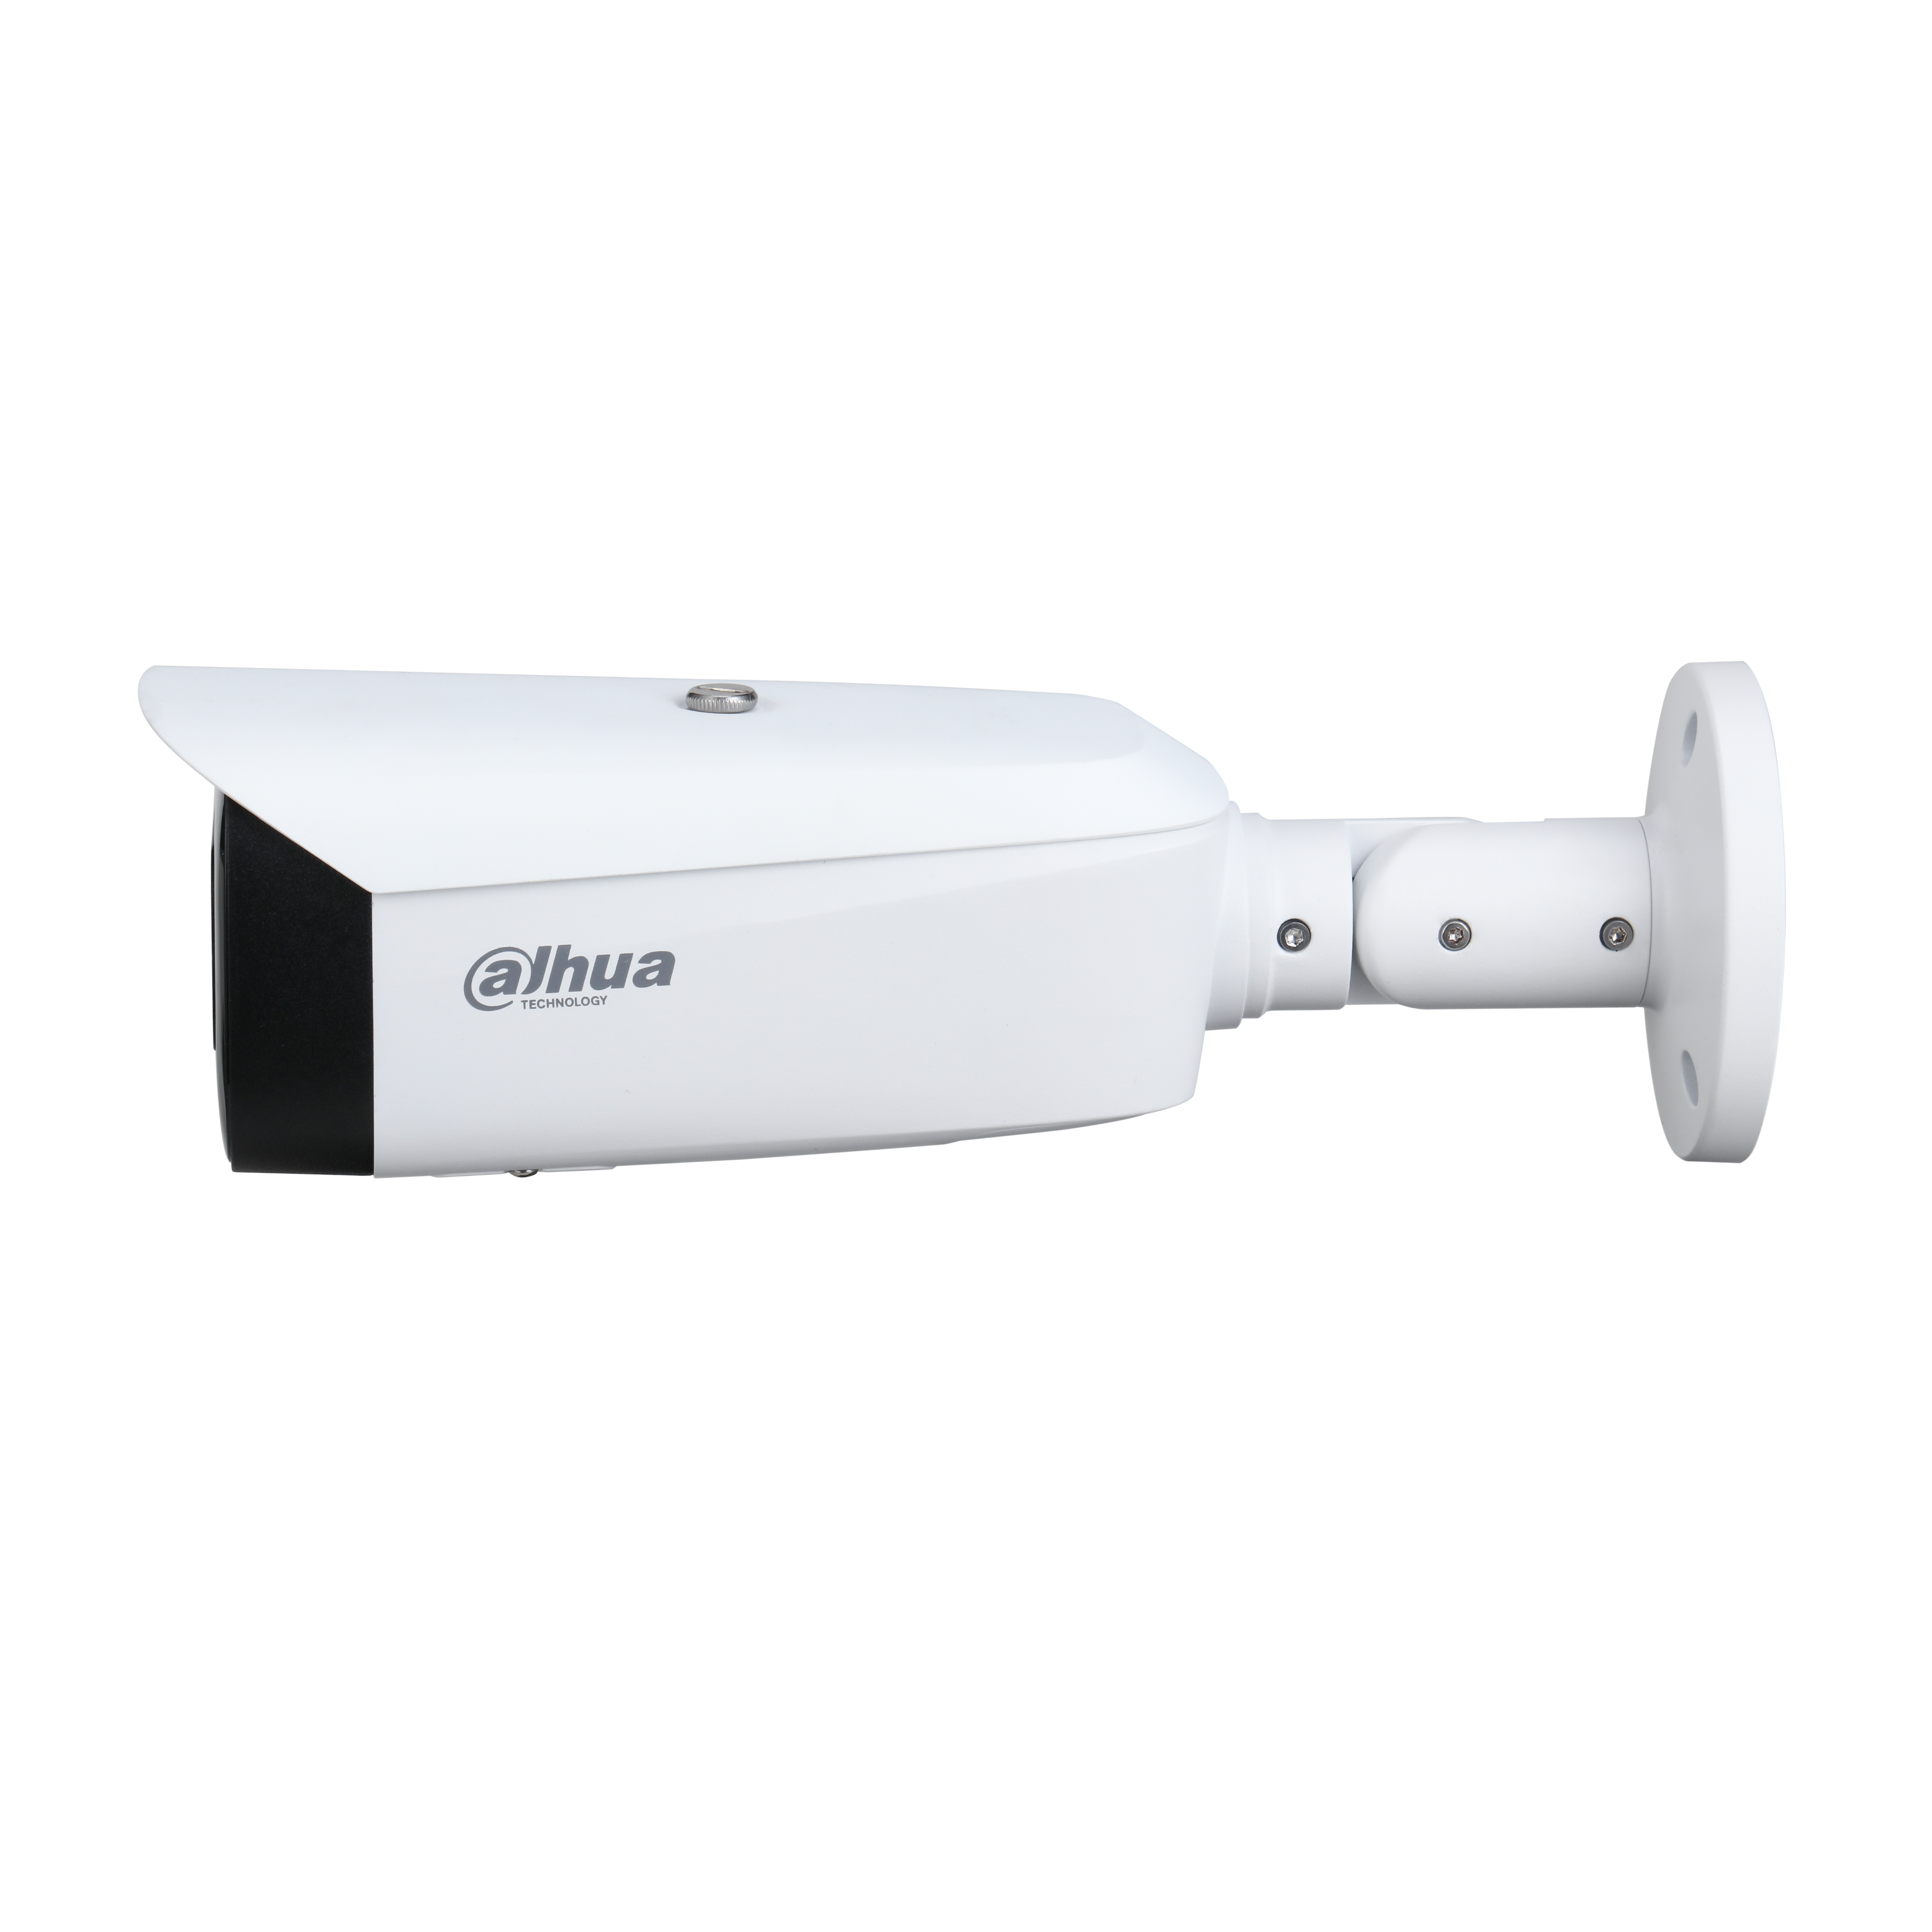 IPC-HFW3849T1P-AS-PV - Dahua - 8MP Smart Dual Illumination Active Deterrence Fixed-focal Bullet WizSense Network Camera